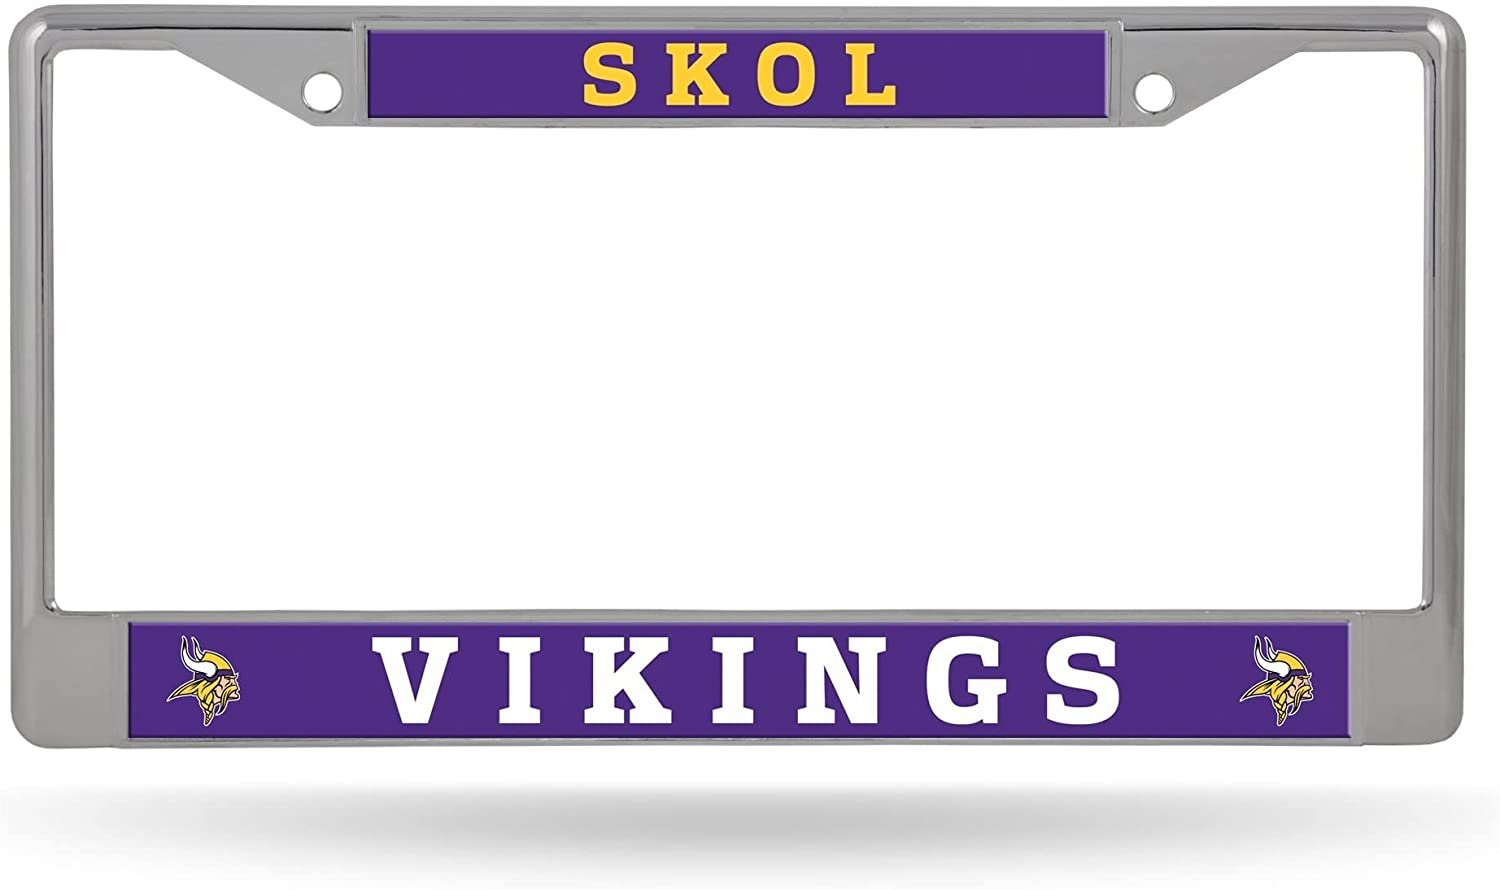 Minnesota Vikings Skol Logo Premium Metal License Plate Frame Chrome Tag Cover, 12x6 Inch